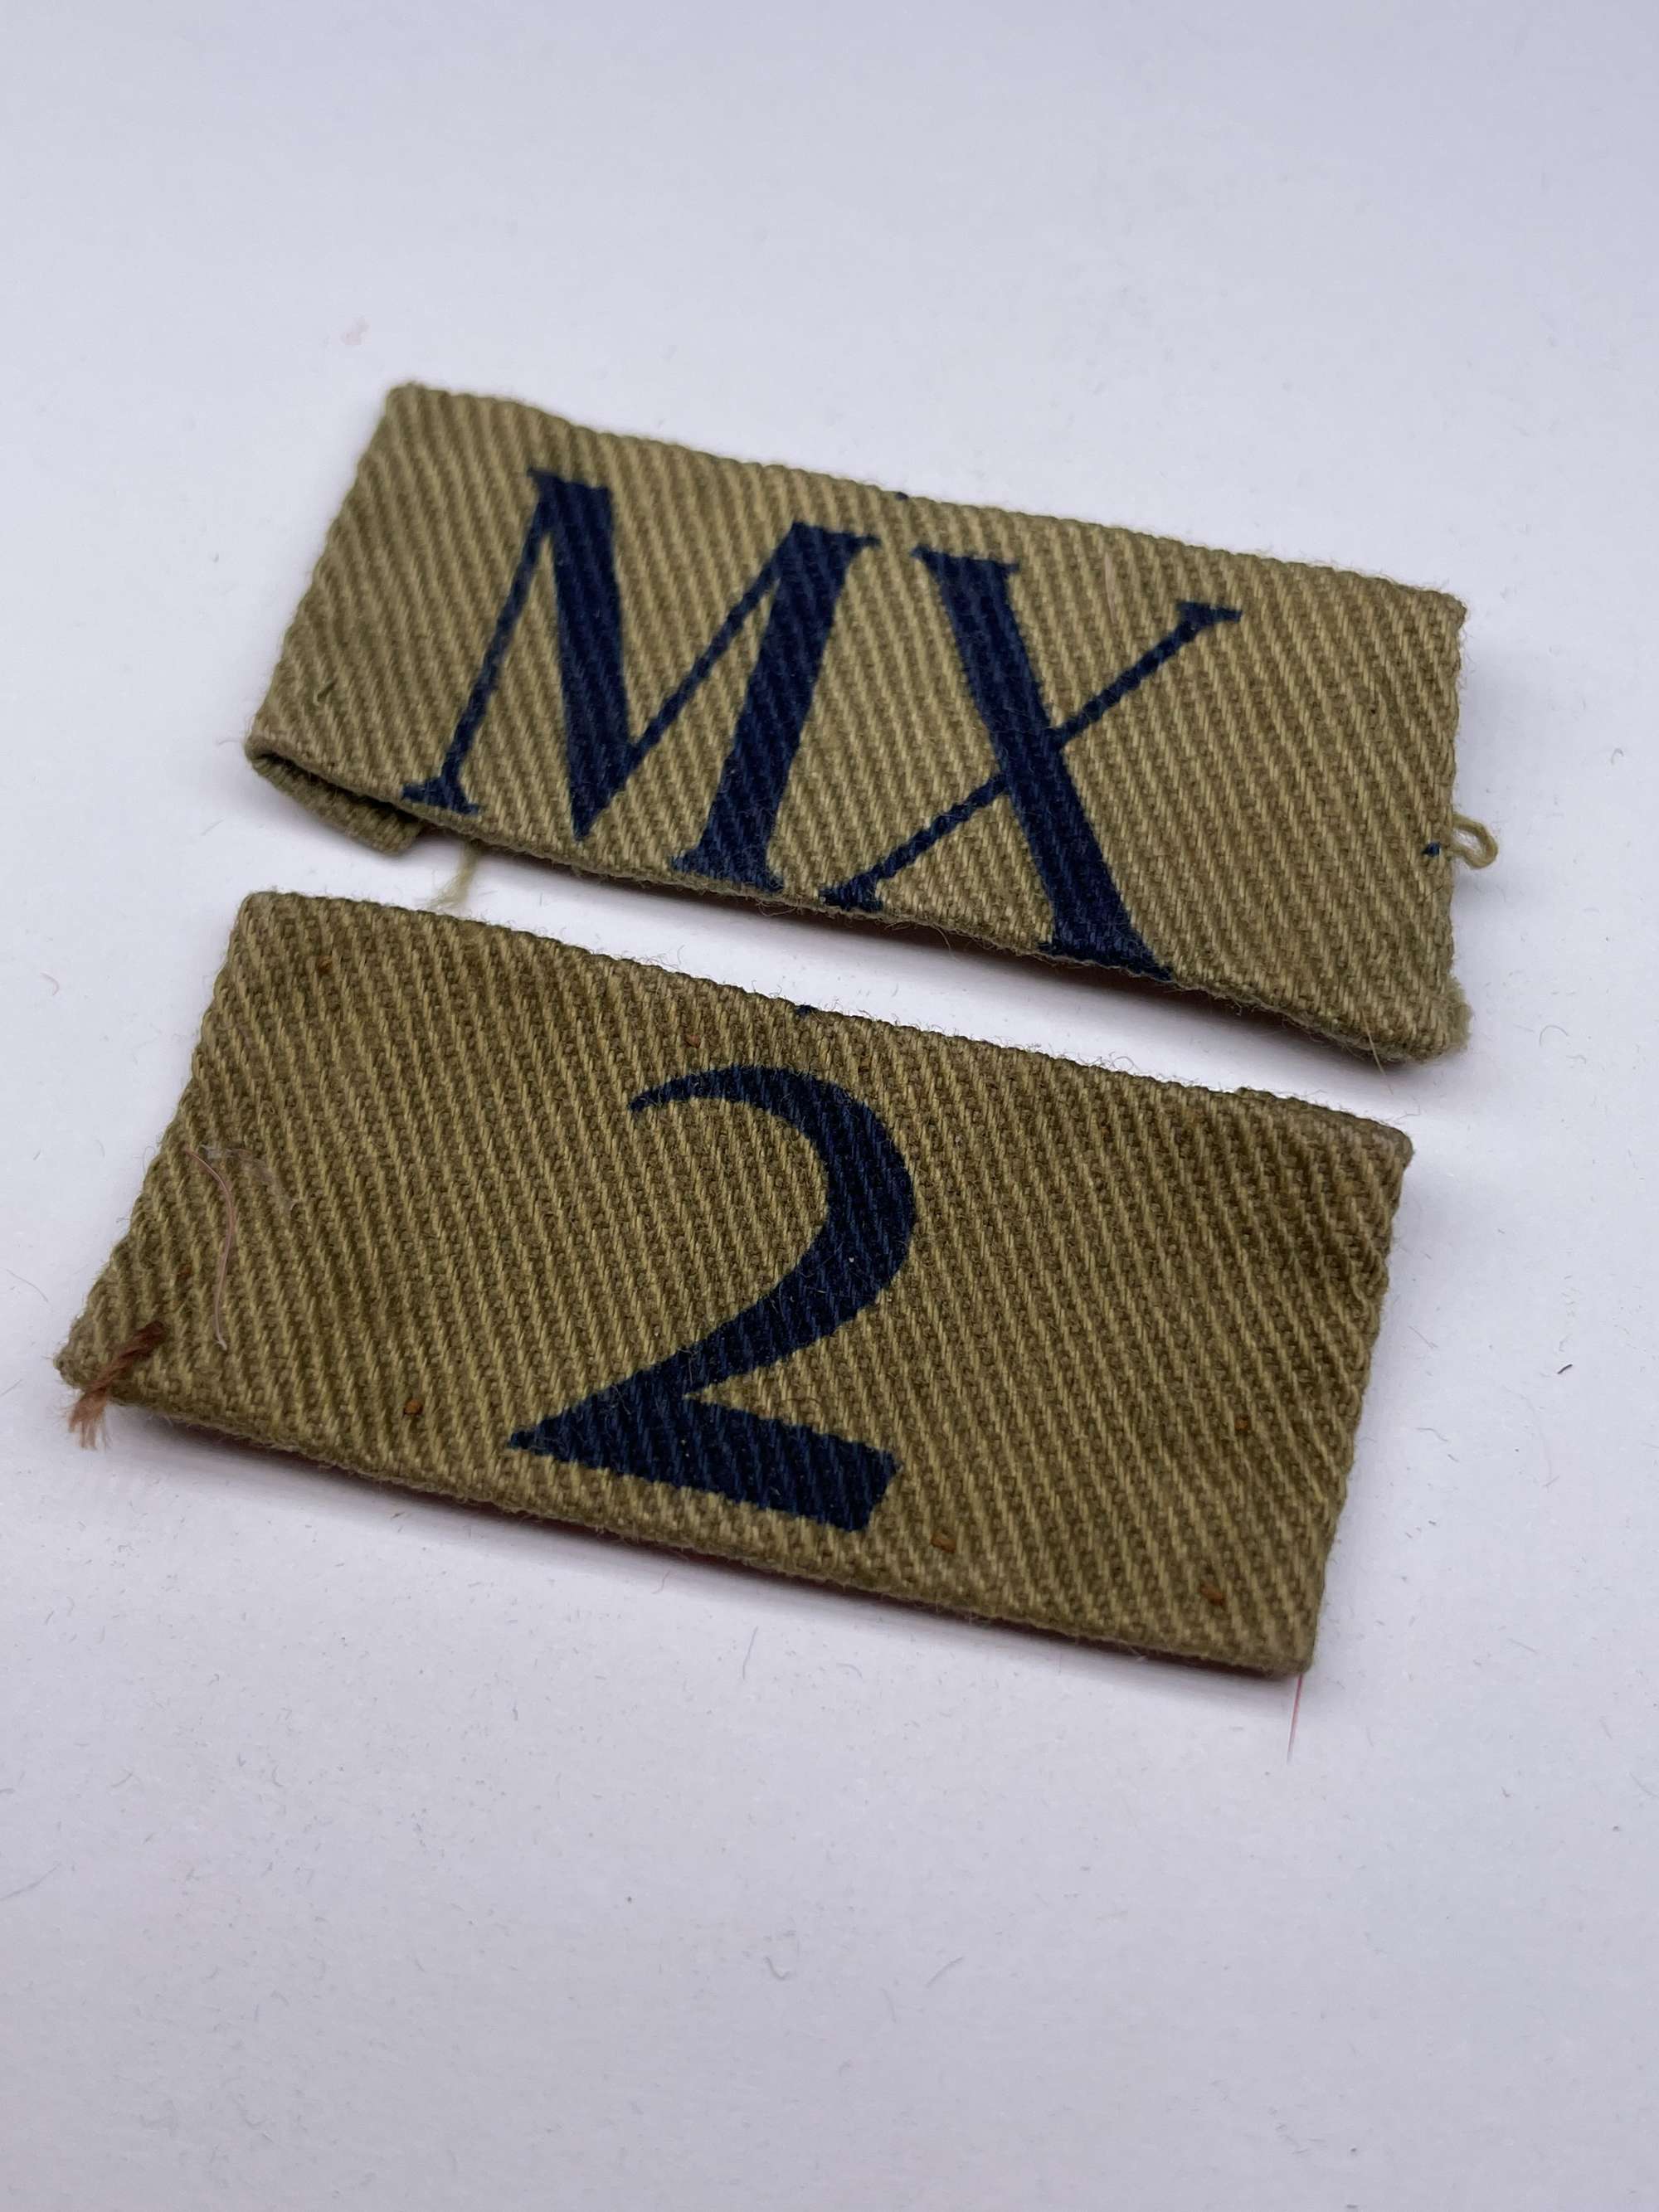 Original World War Two Home Guard Formation Patch, MX2 - 2nd Bttn (Hounslow) Home Guard